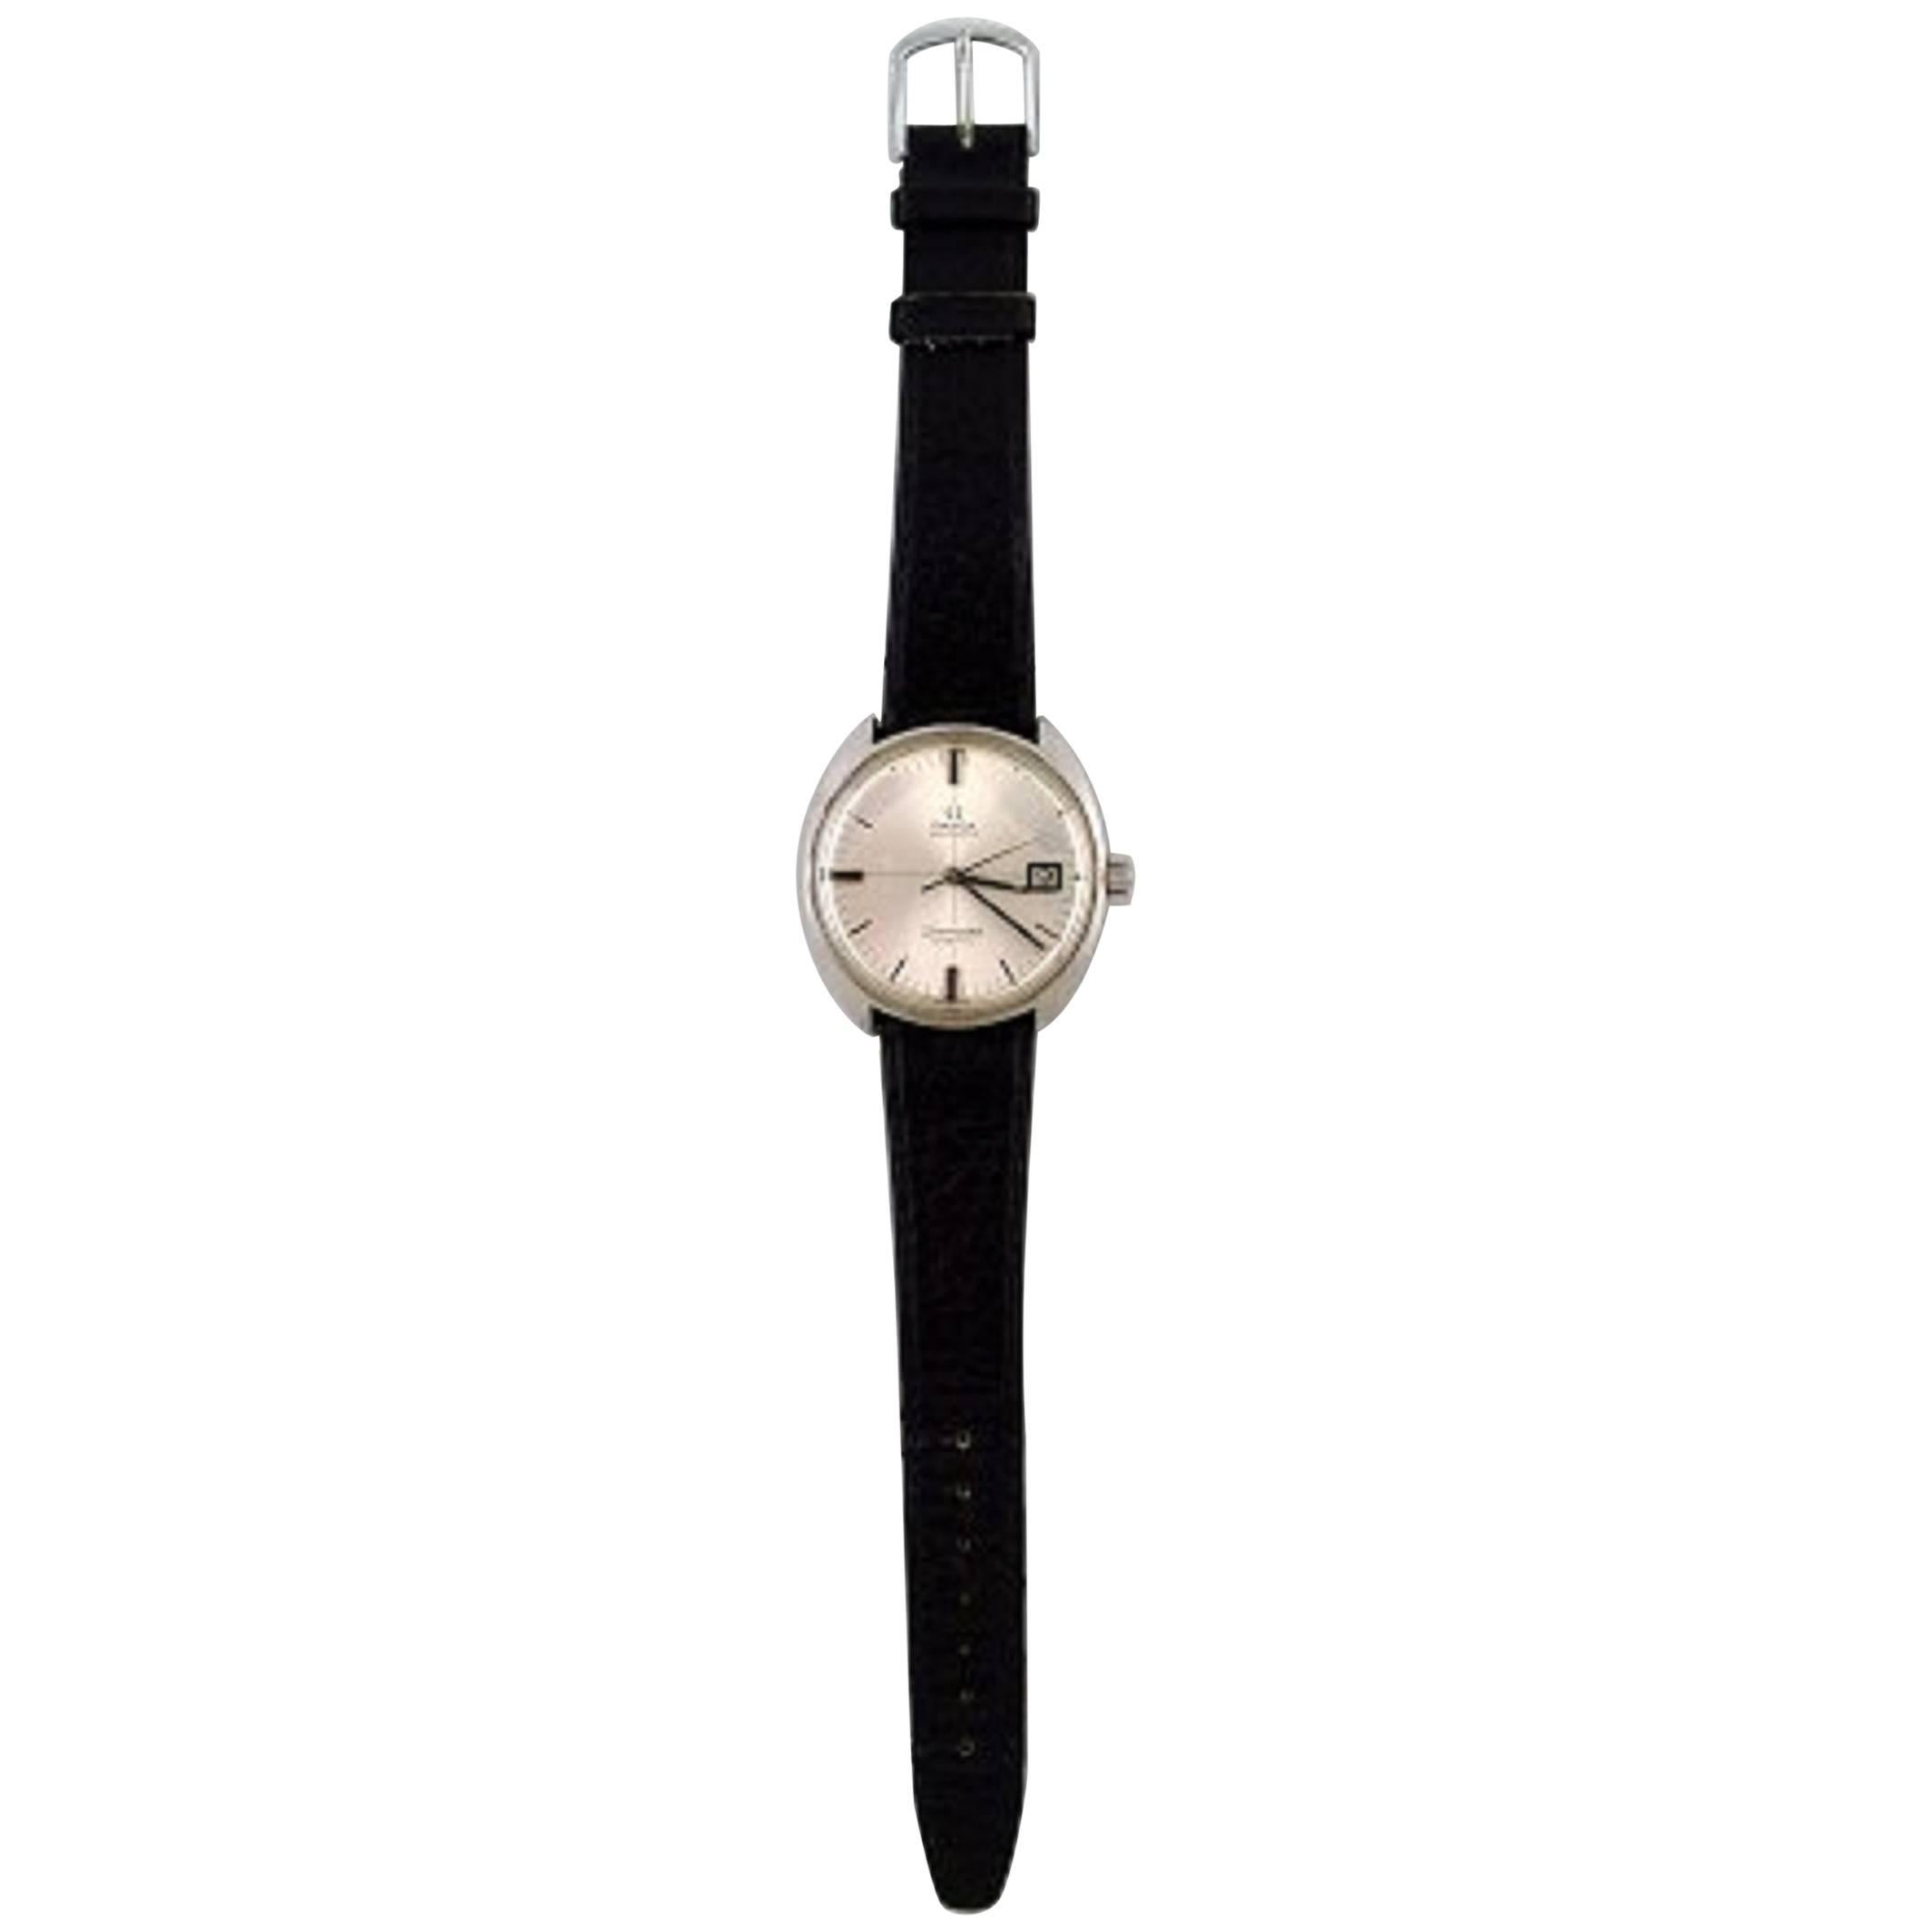 Omega Seamaster Cosmic Automatic, Vintage Men's Wrist Watch, 1960s